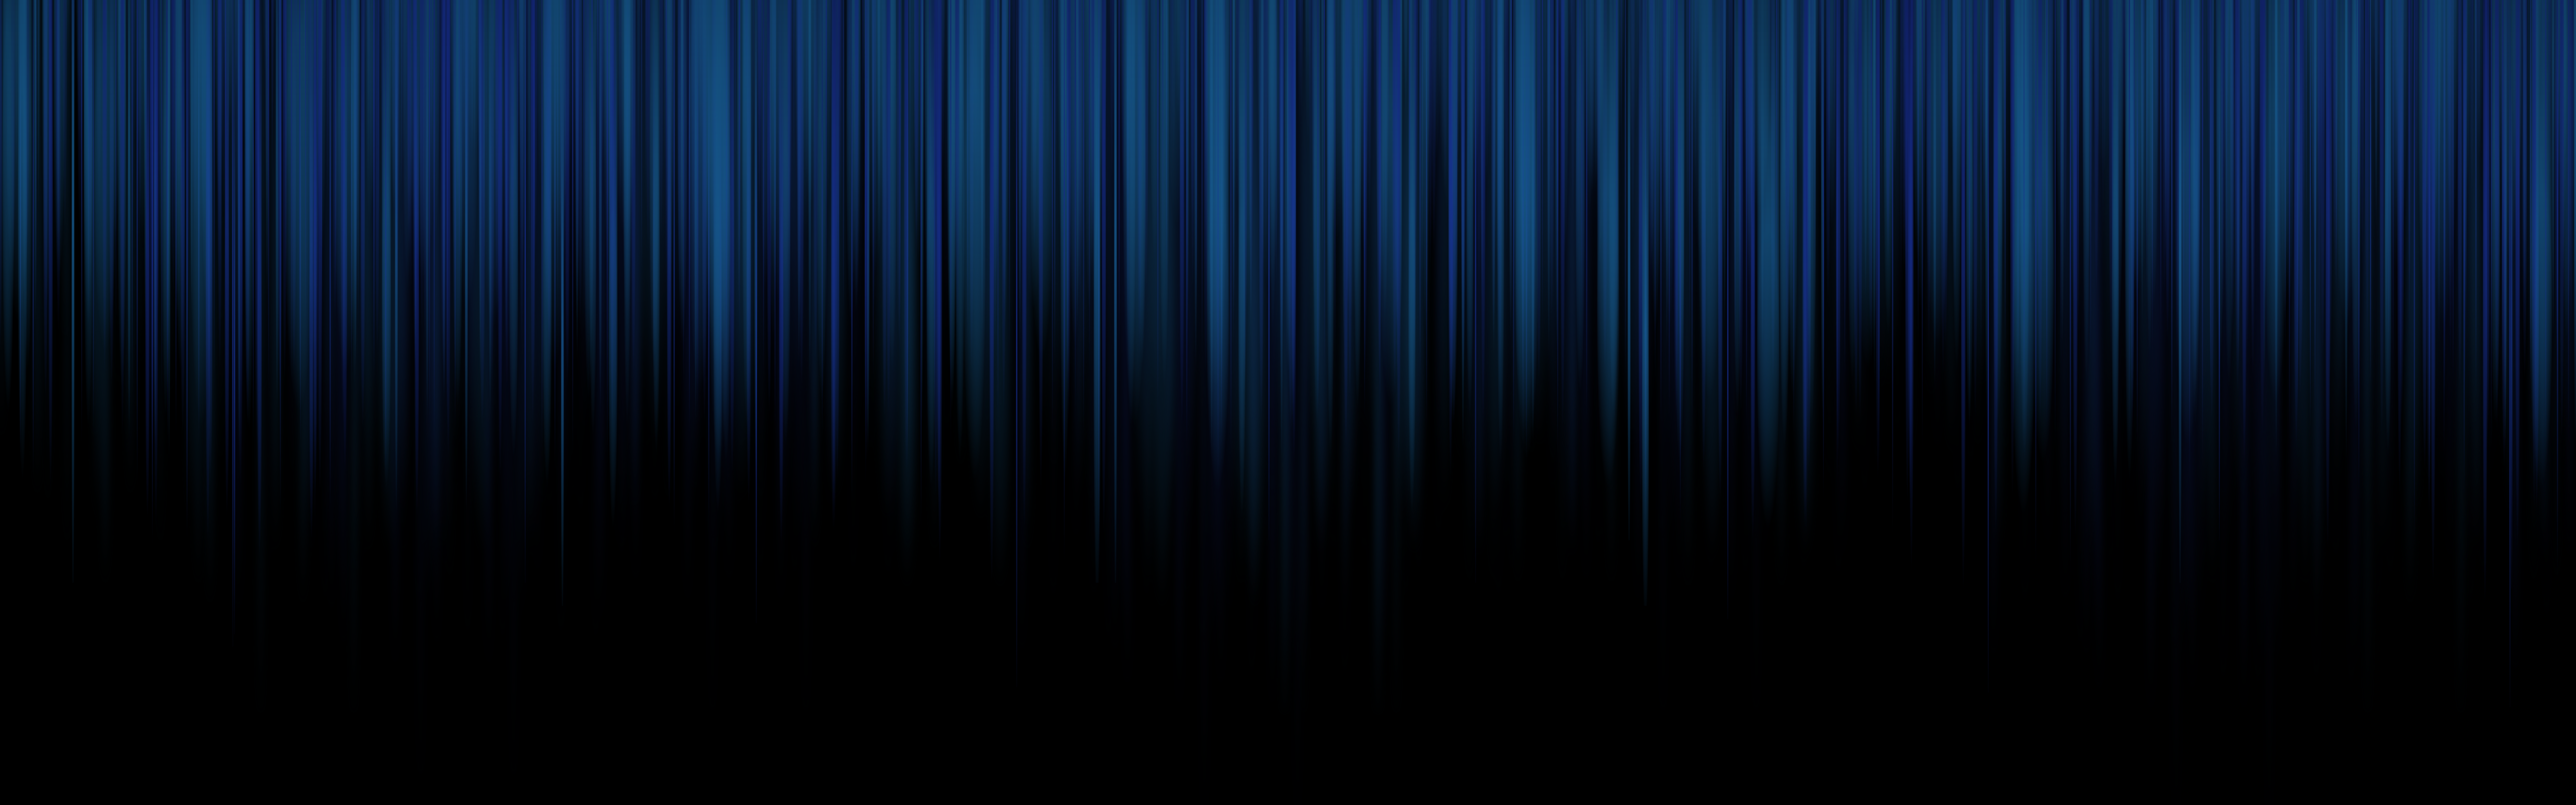 Free download Full HD Wallpapers Backgrounds Blue Dual Screen by Dan Wiersema [5120x1600] for